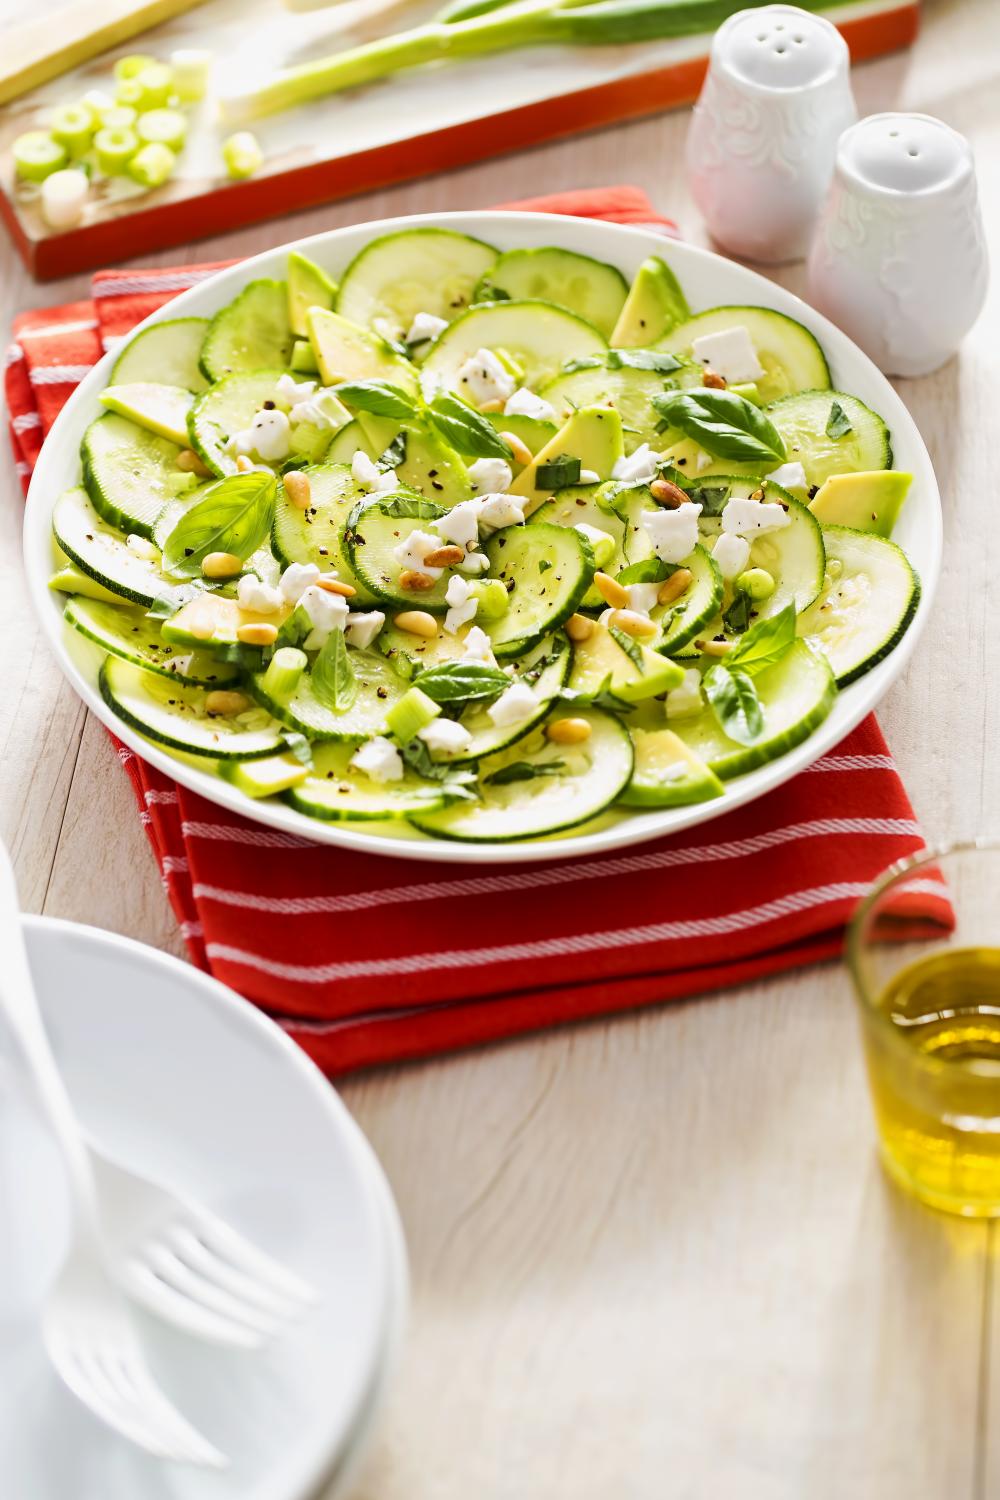 Courgette carpaccio salad